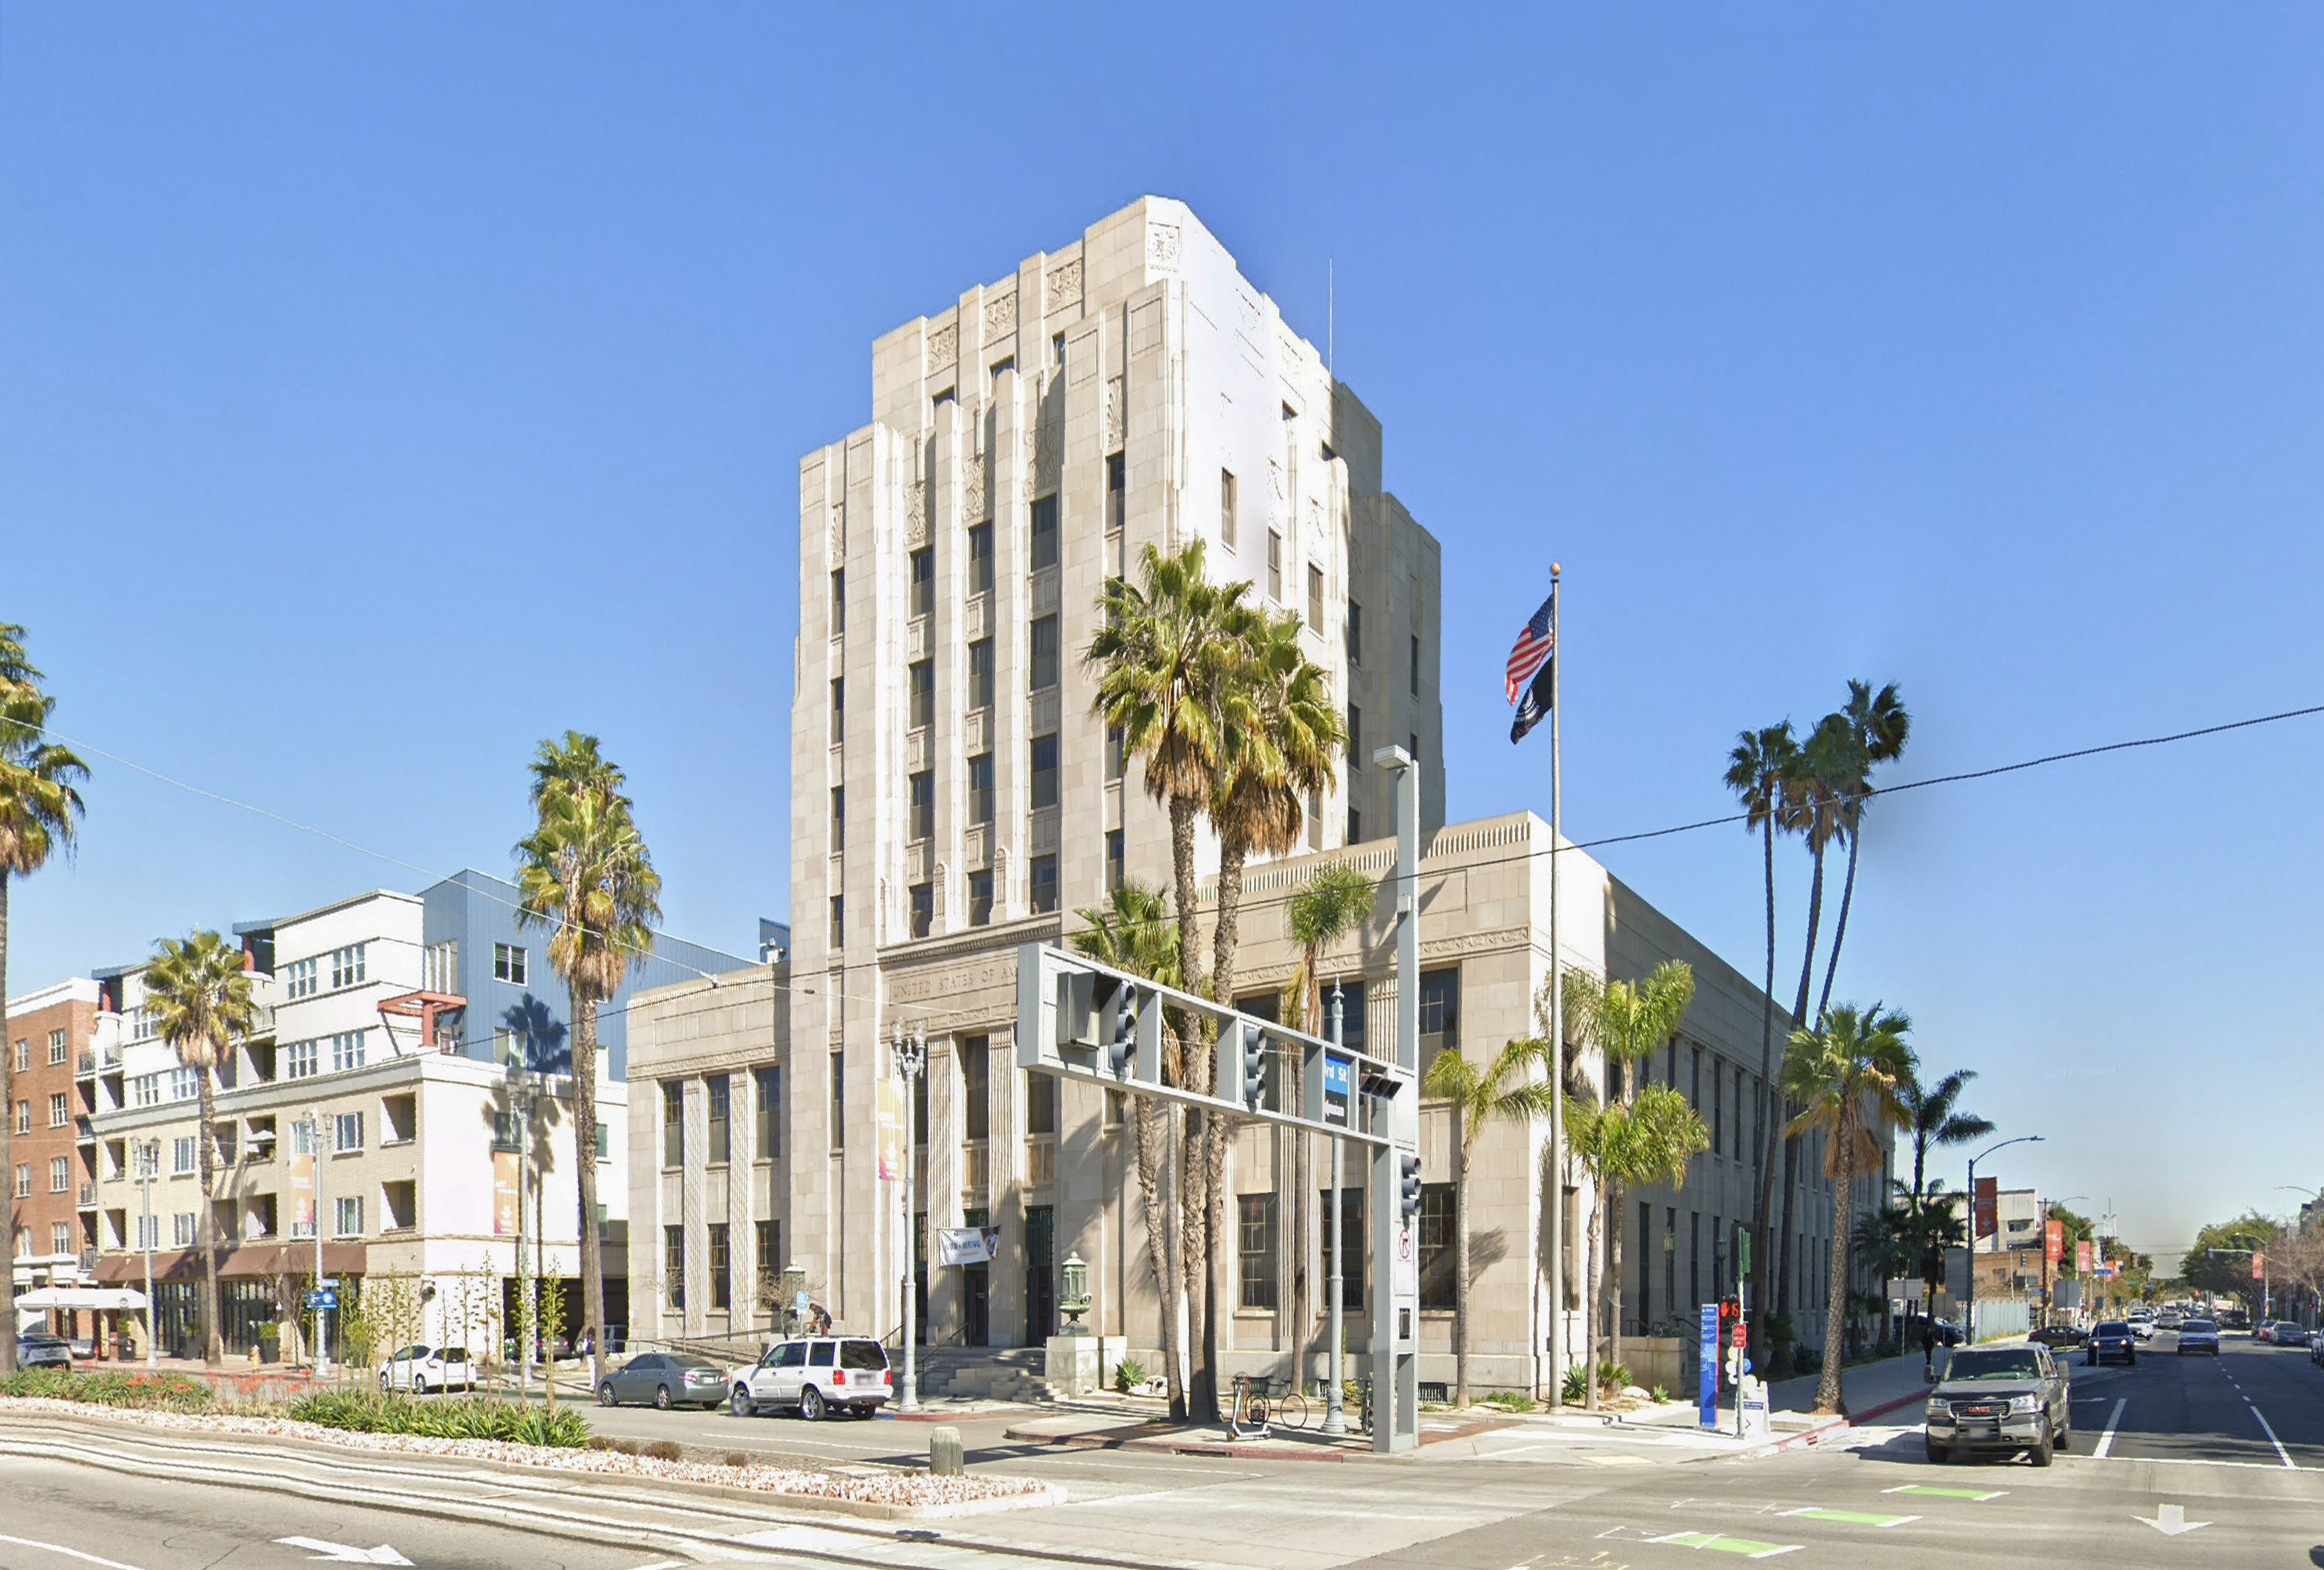 Long Beach Main Posat Office Building